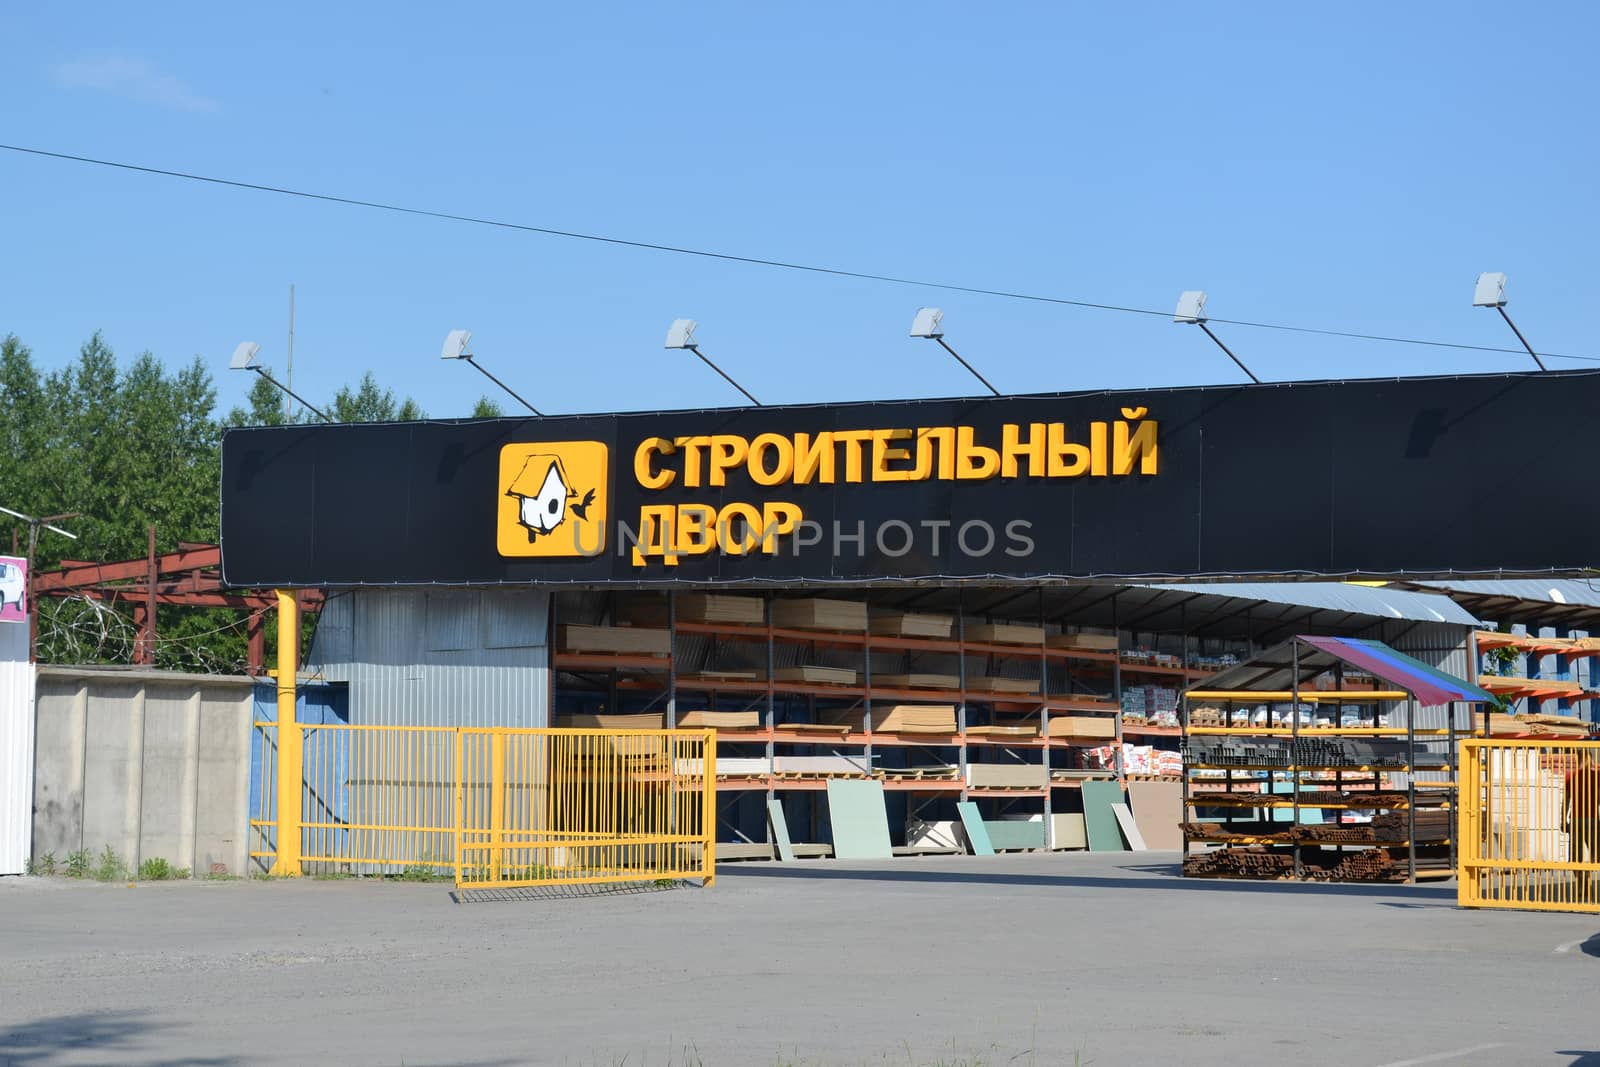 the warehouse shop "Construction Yard" in Tyumen, Russia